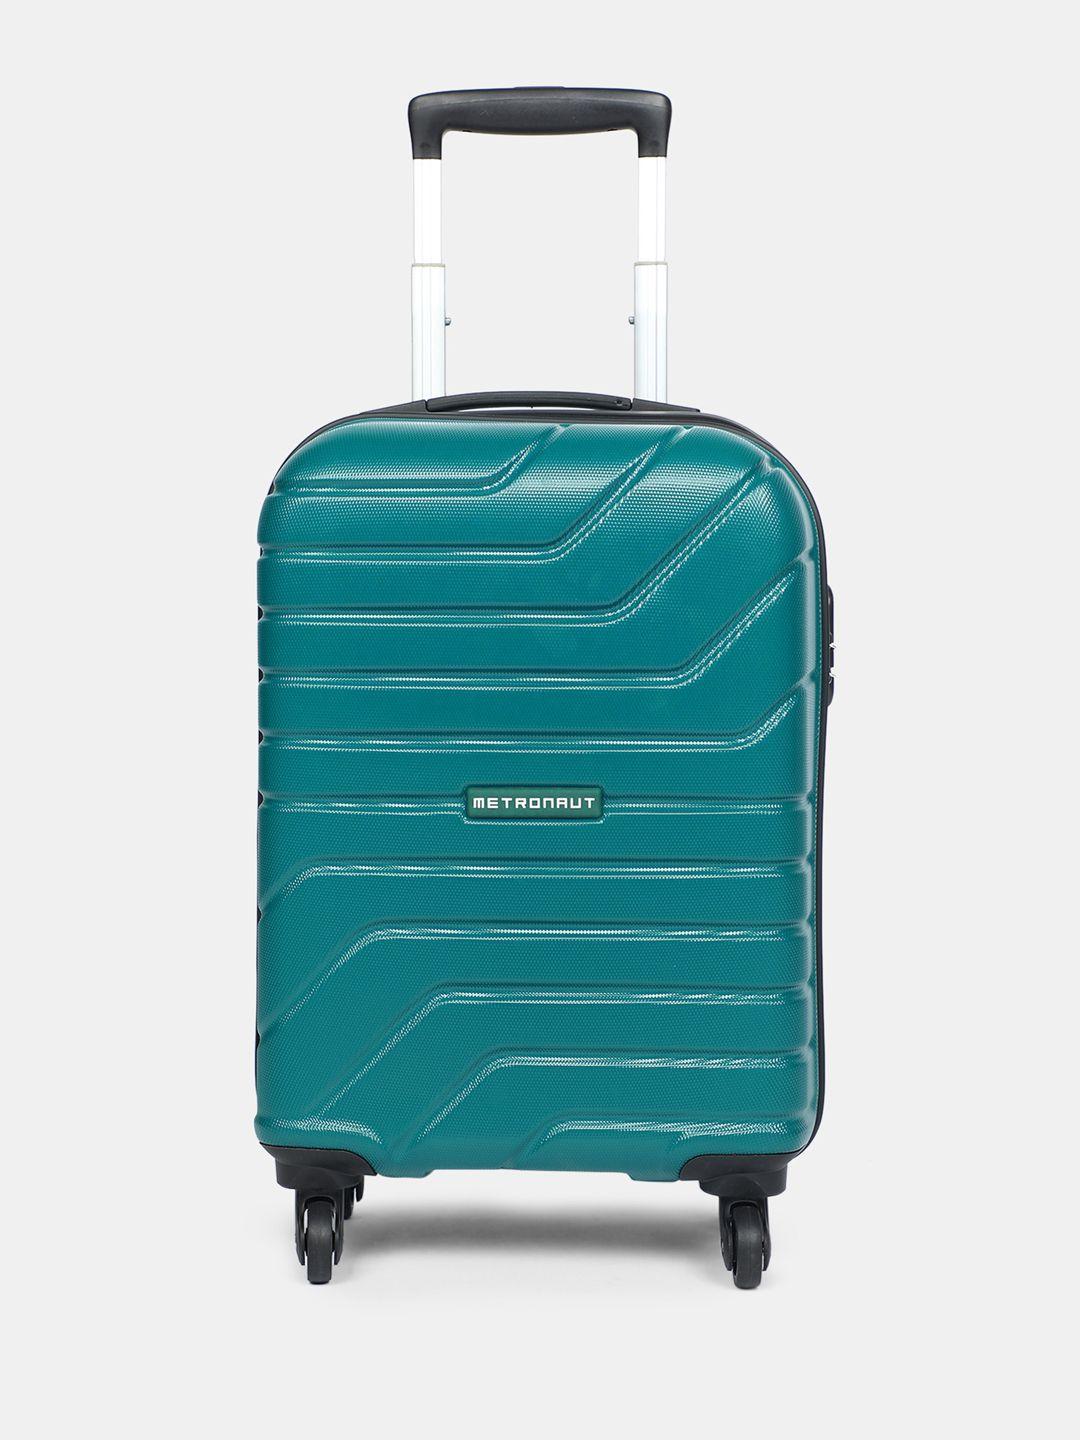 metronaut cabin trolley suitcase